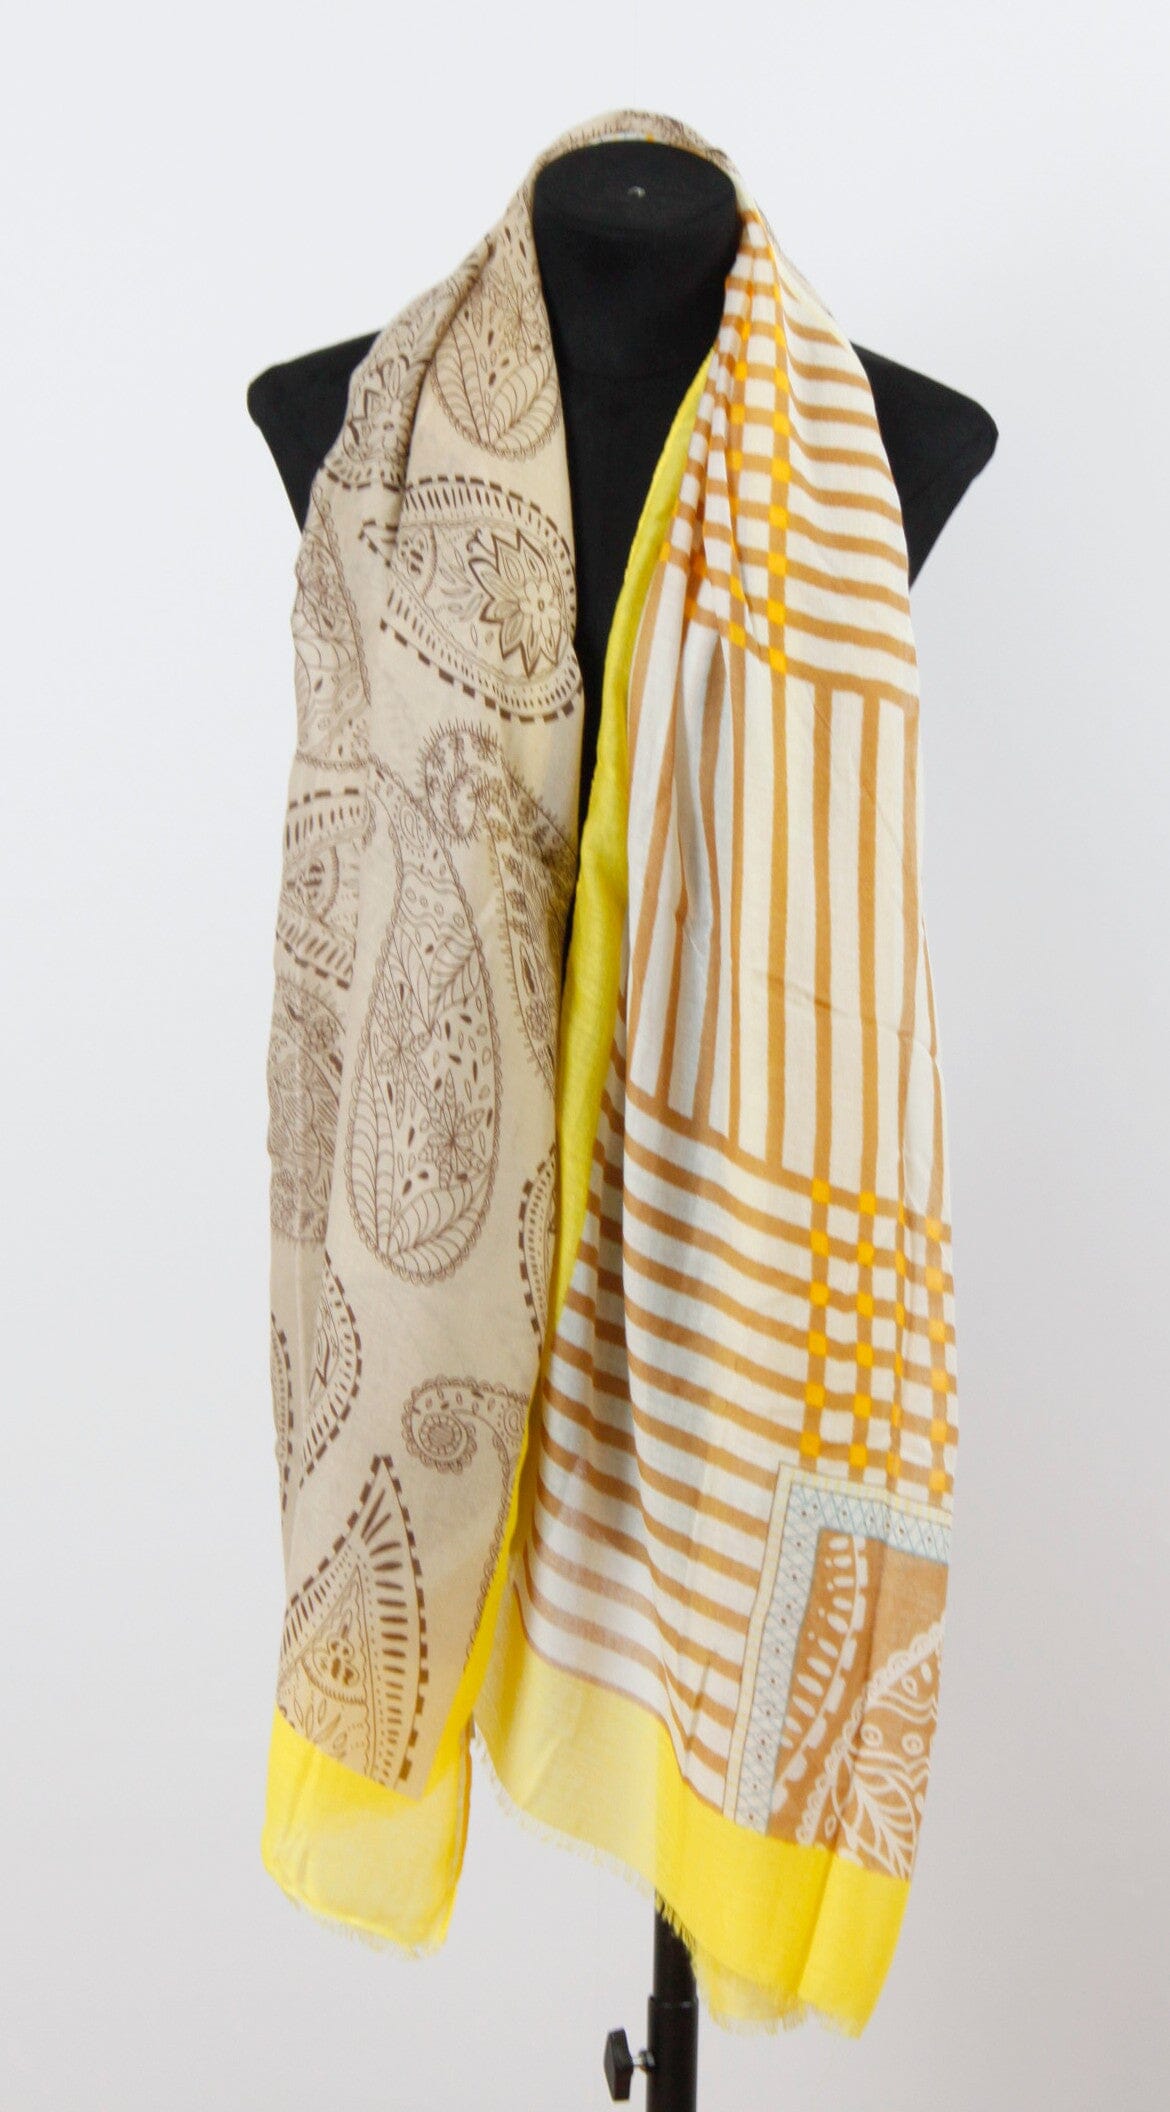 Echarpe Femme Dessin foulard 